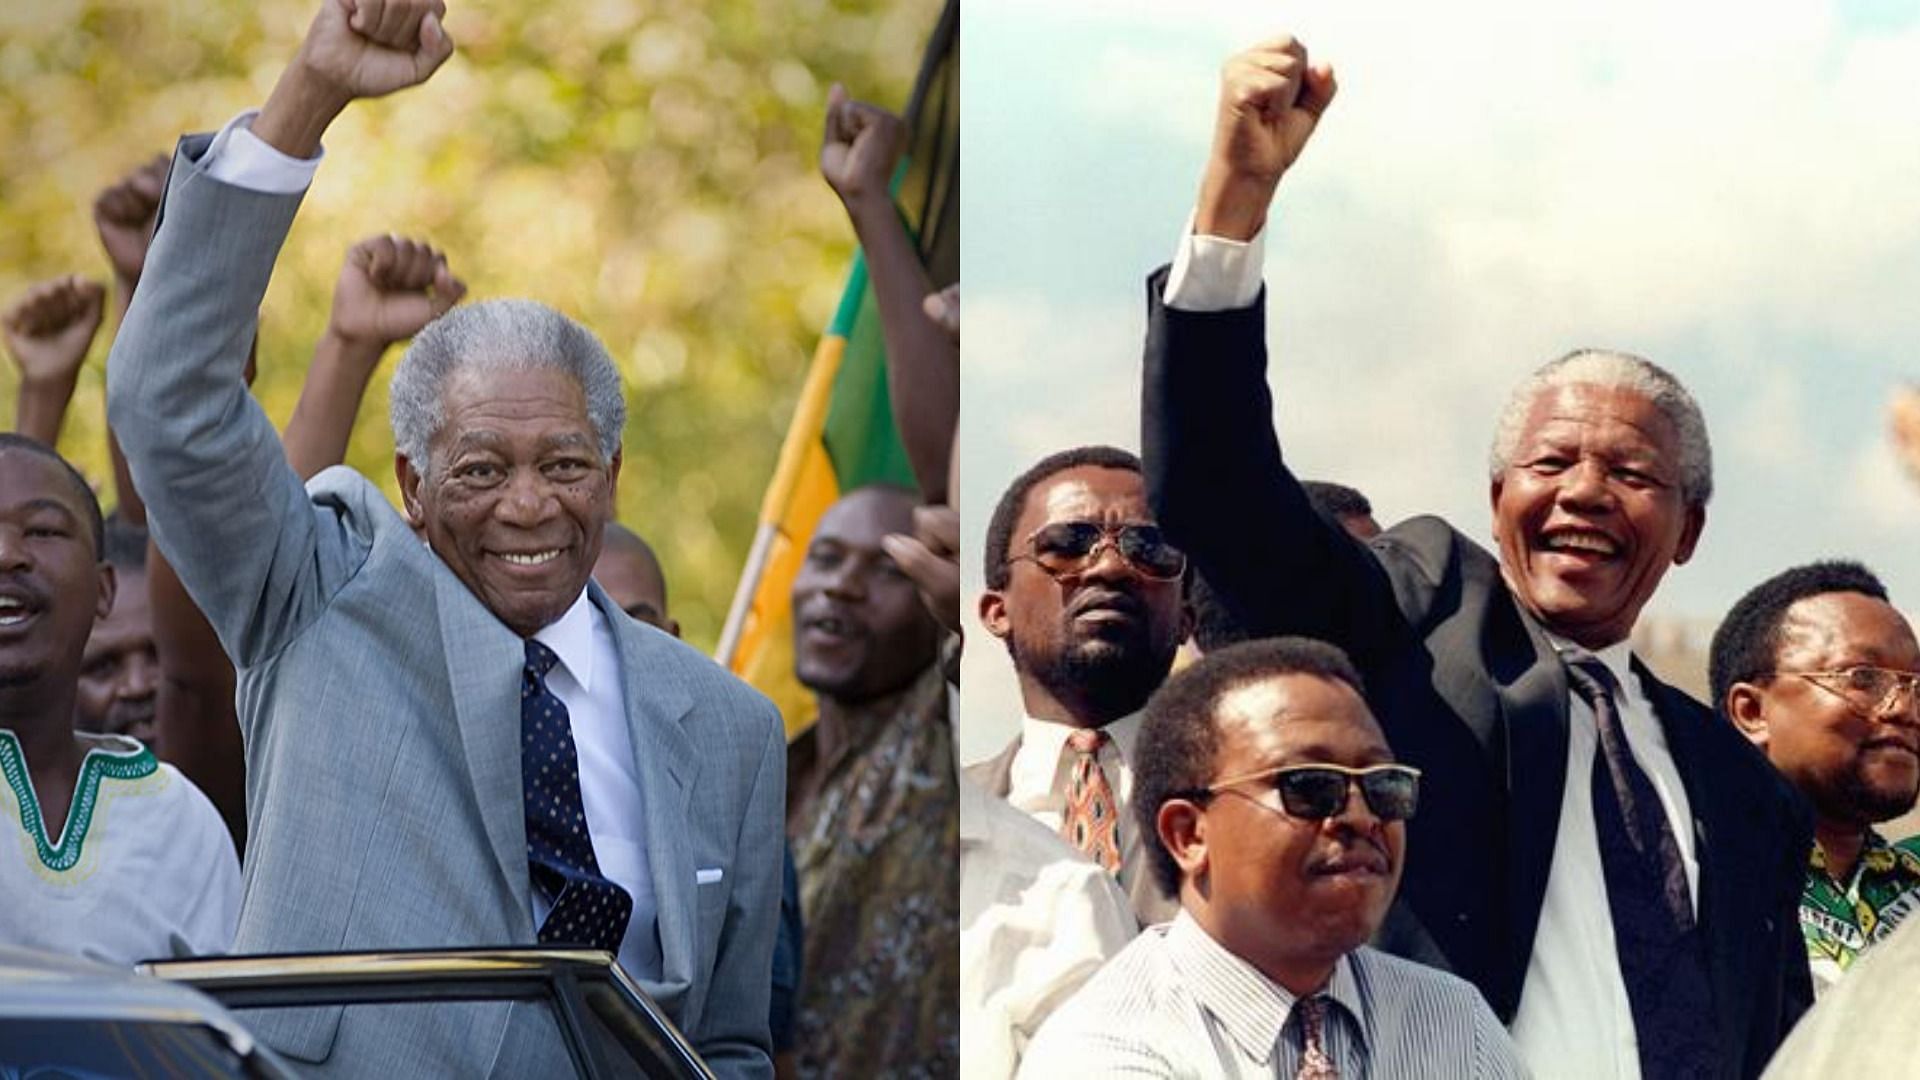 People still mistake Morgan Freeman for Nelson Mandela (Image via Sportskeeda)